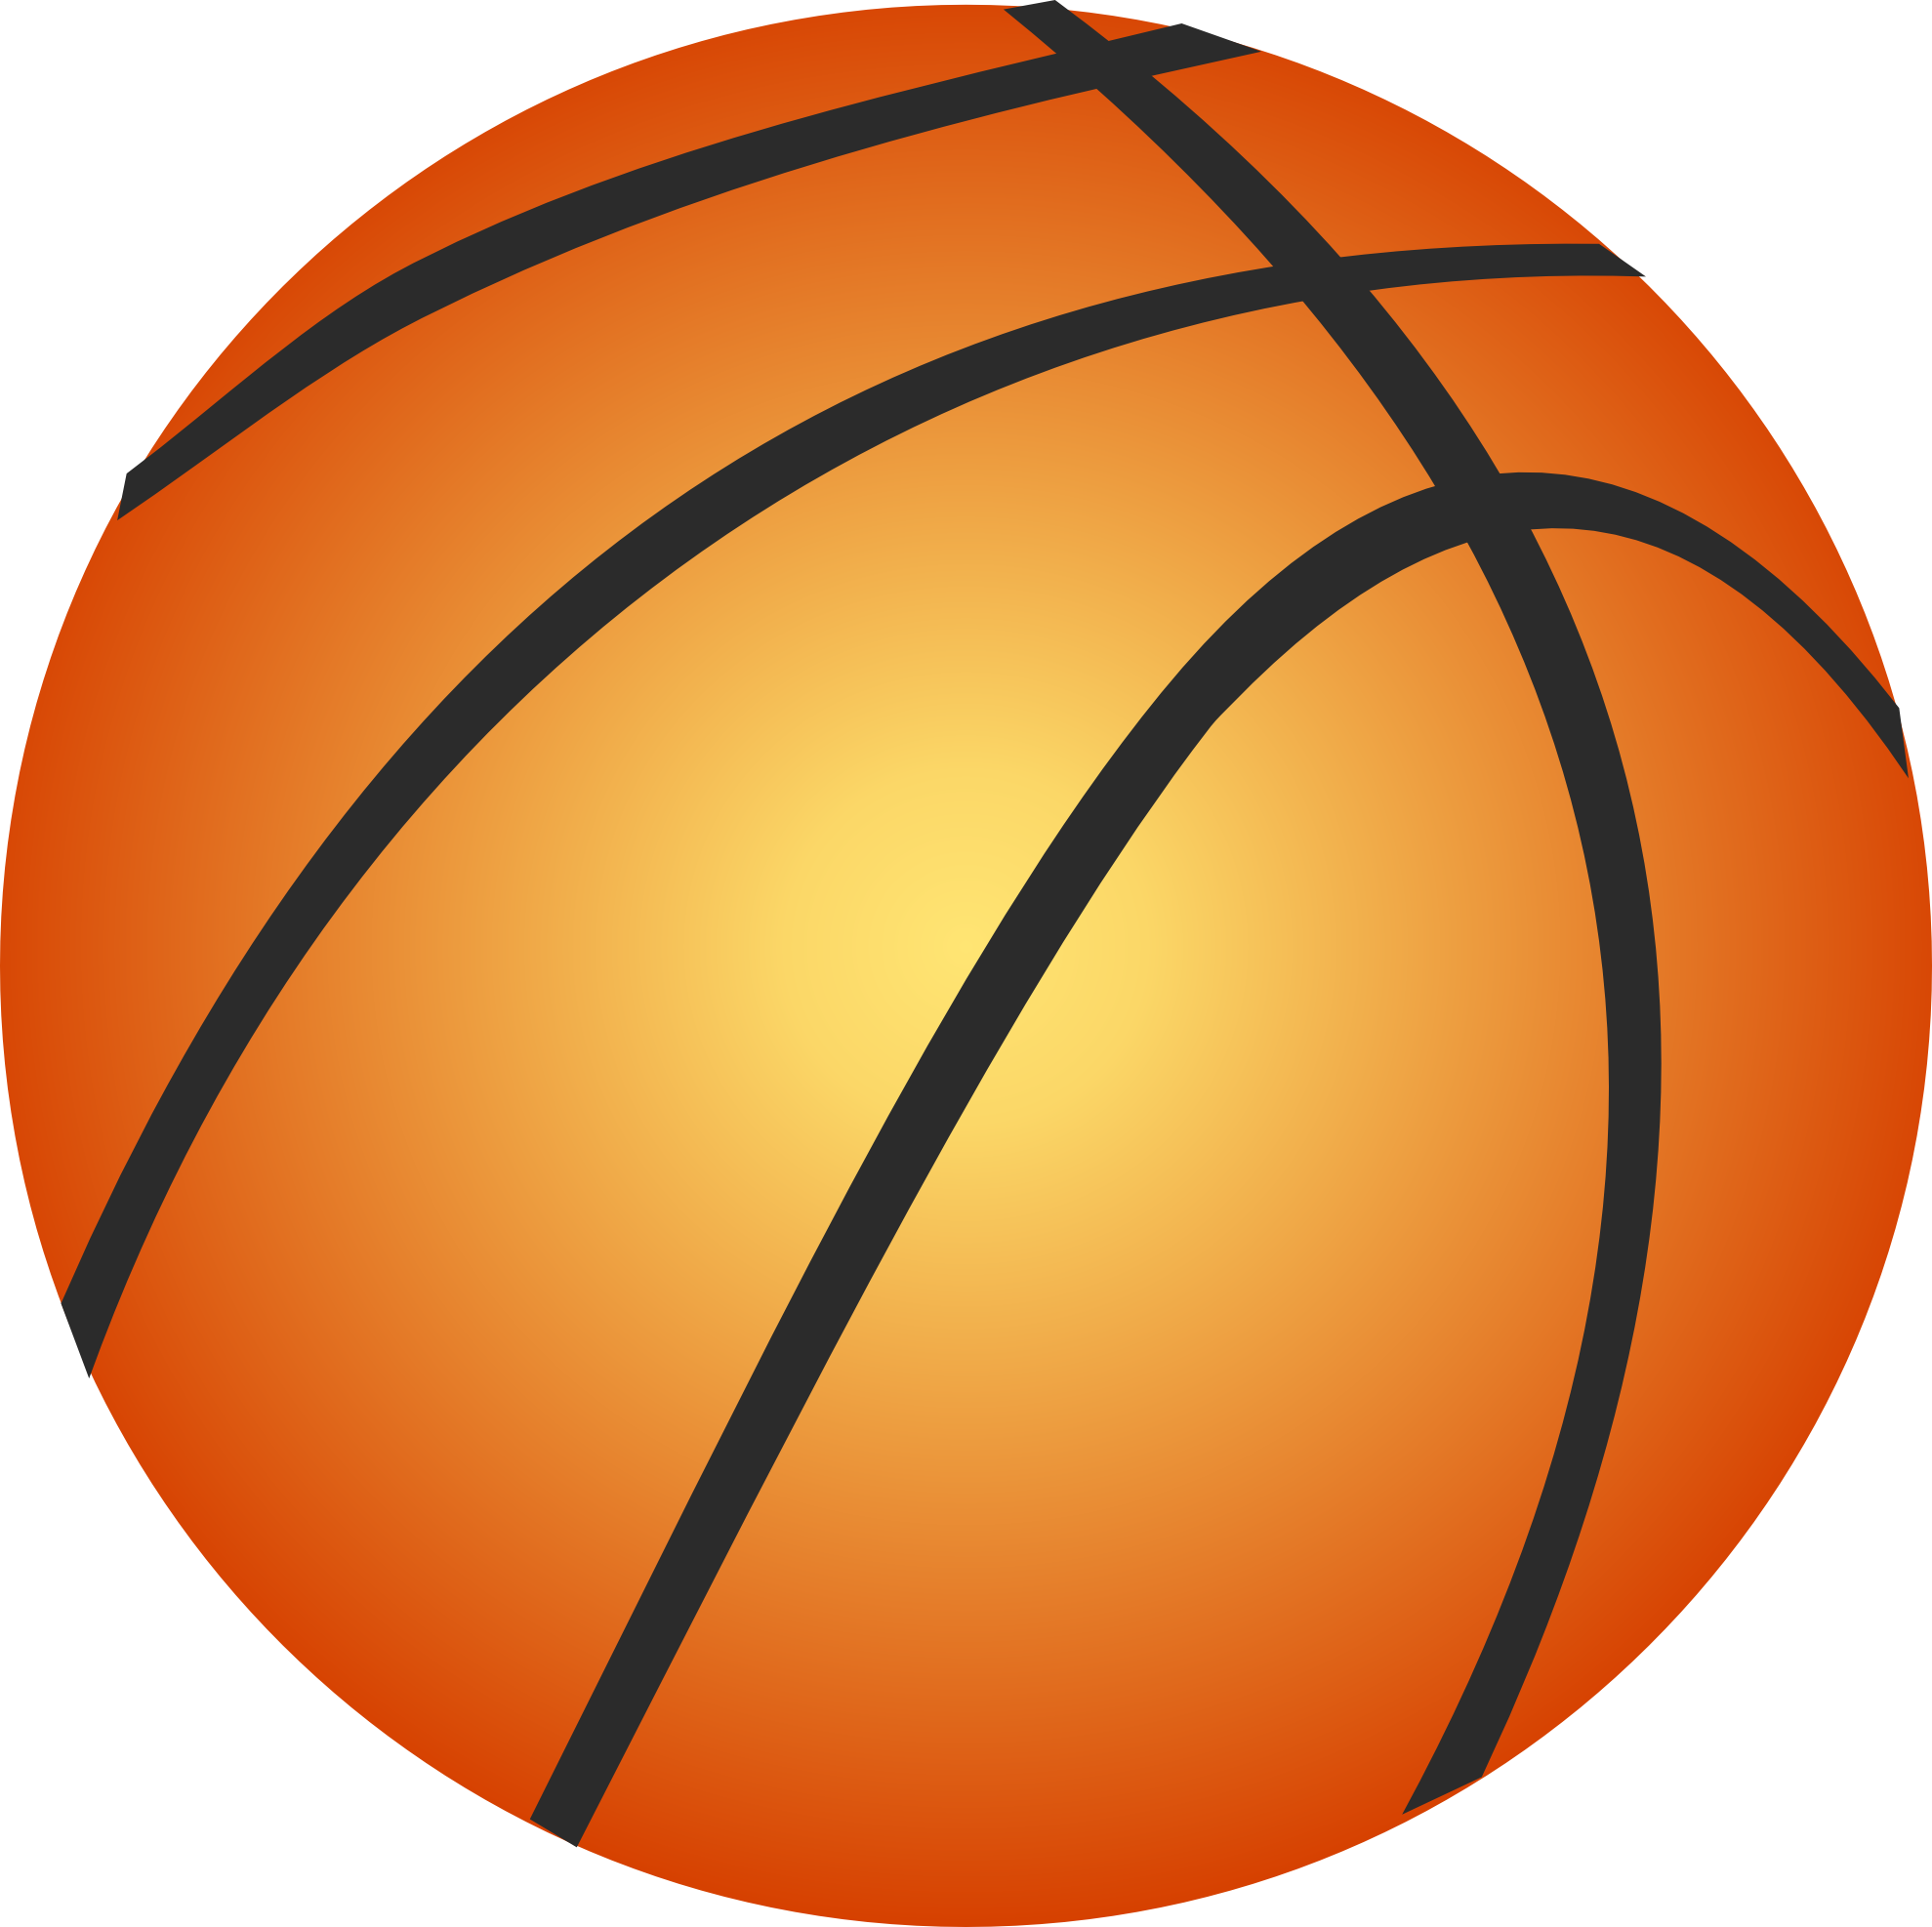 Clipart Of A Basketball - ClipArt Best